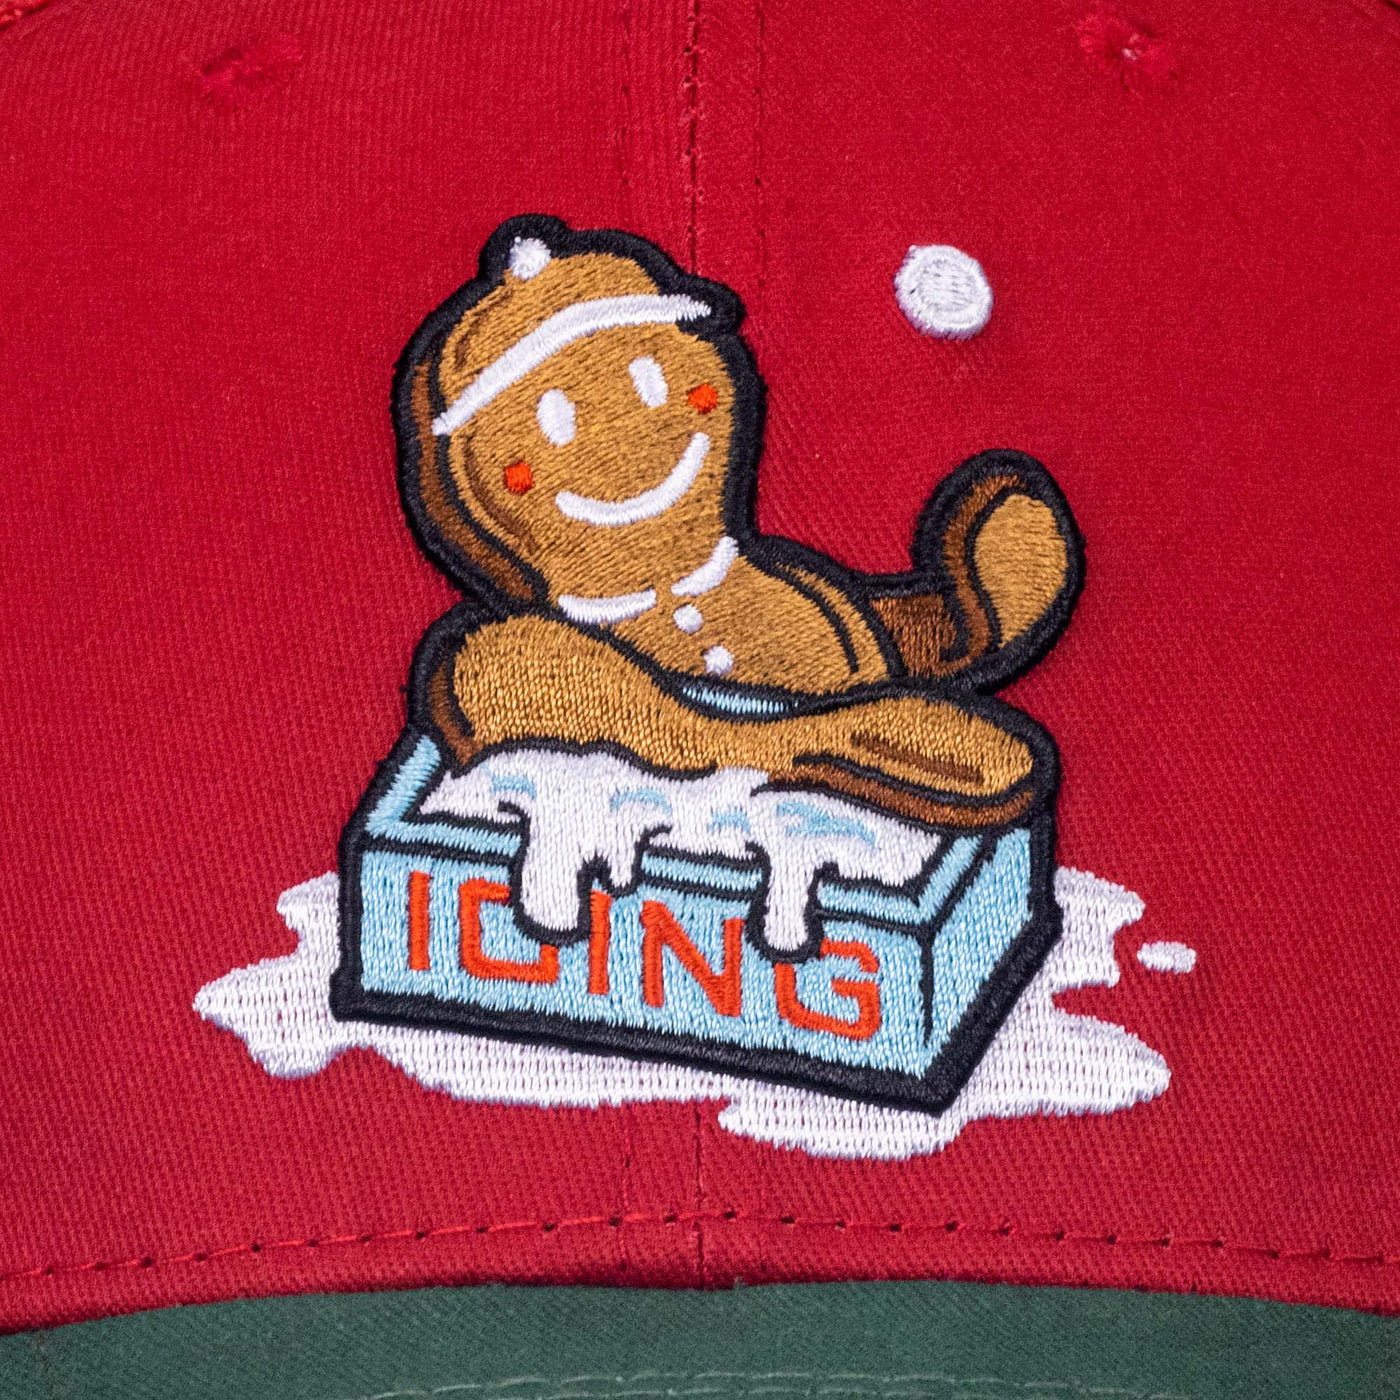 Icing Gingerbread Man Trucker Cap - Gingerbread scented